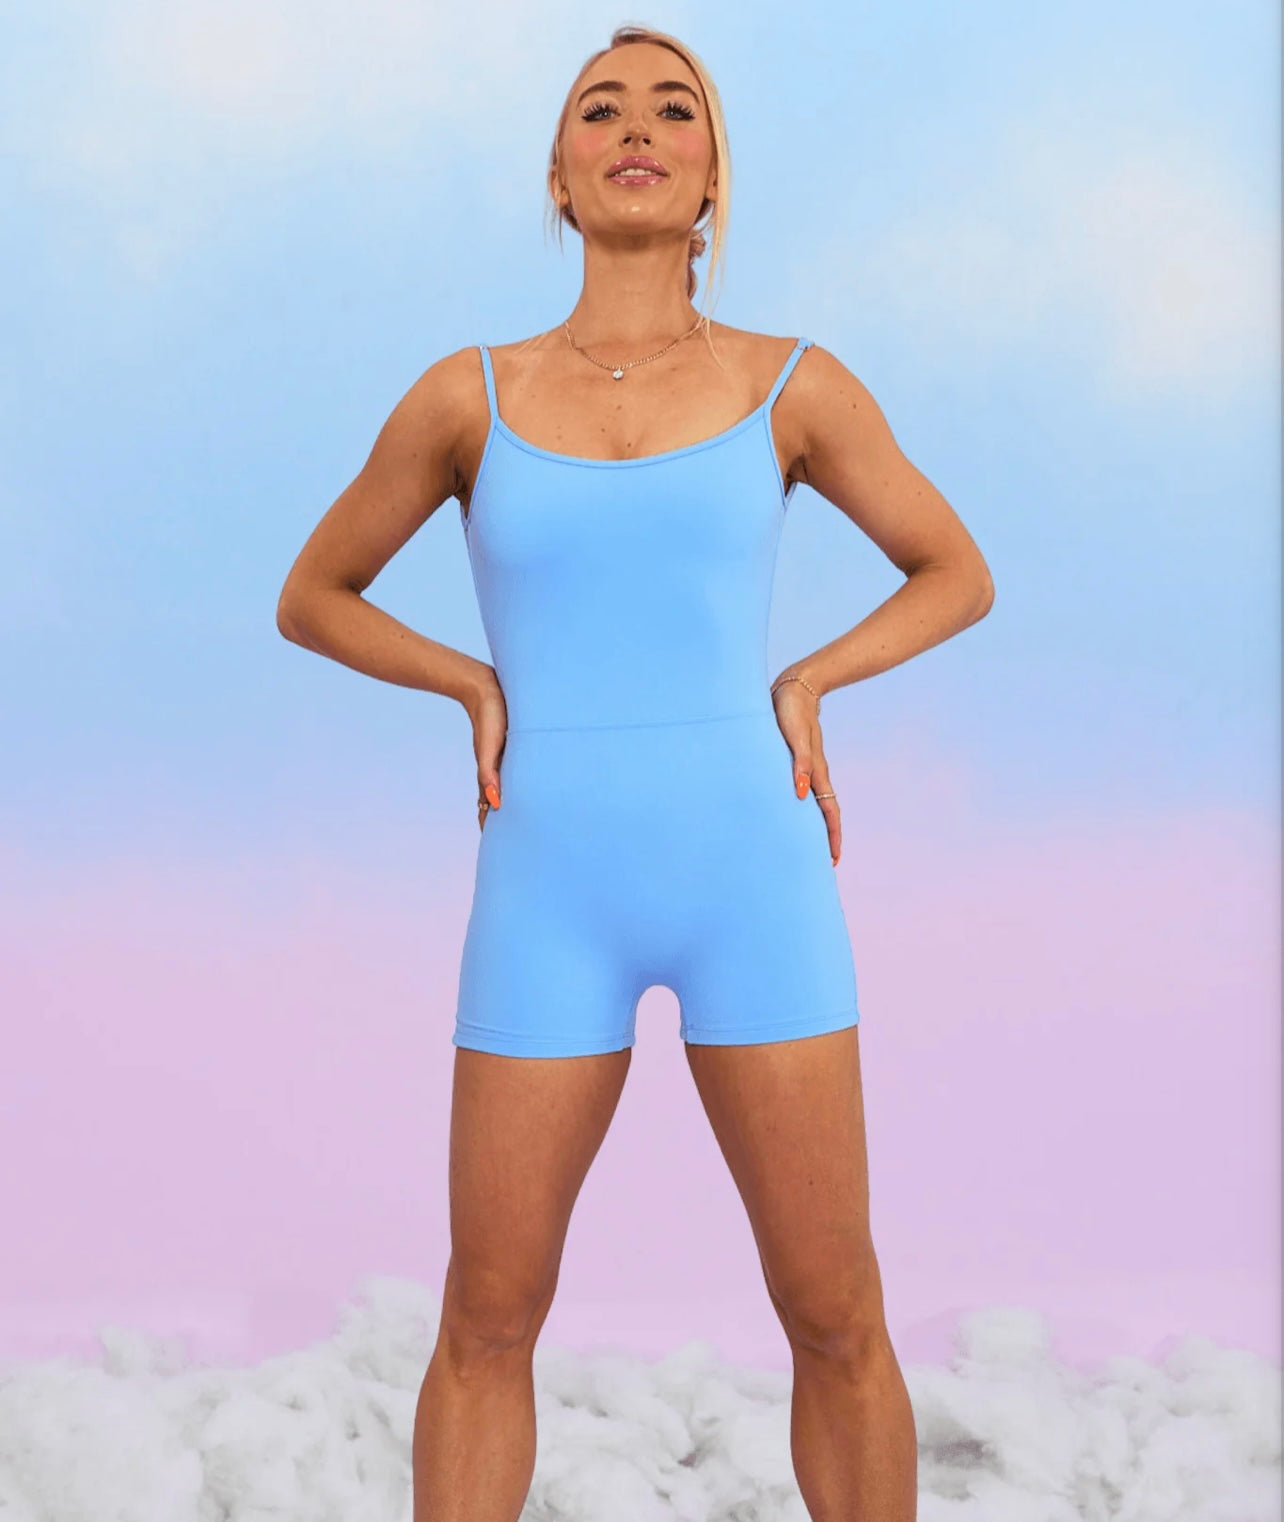 Claudia Bodysuit - Jelly Bean